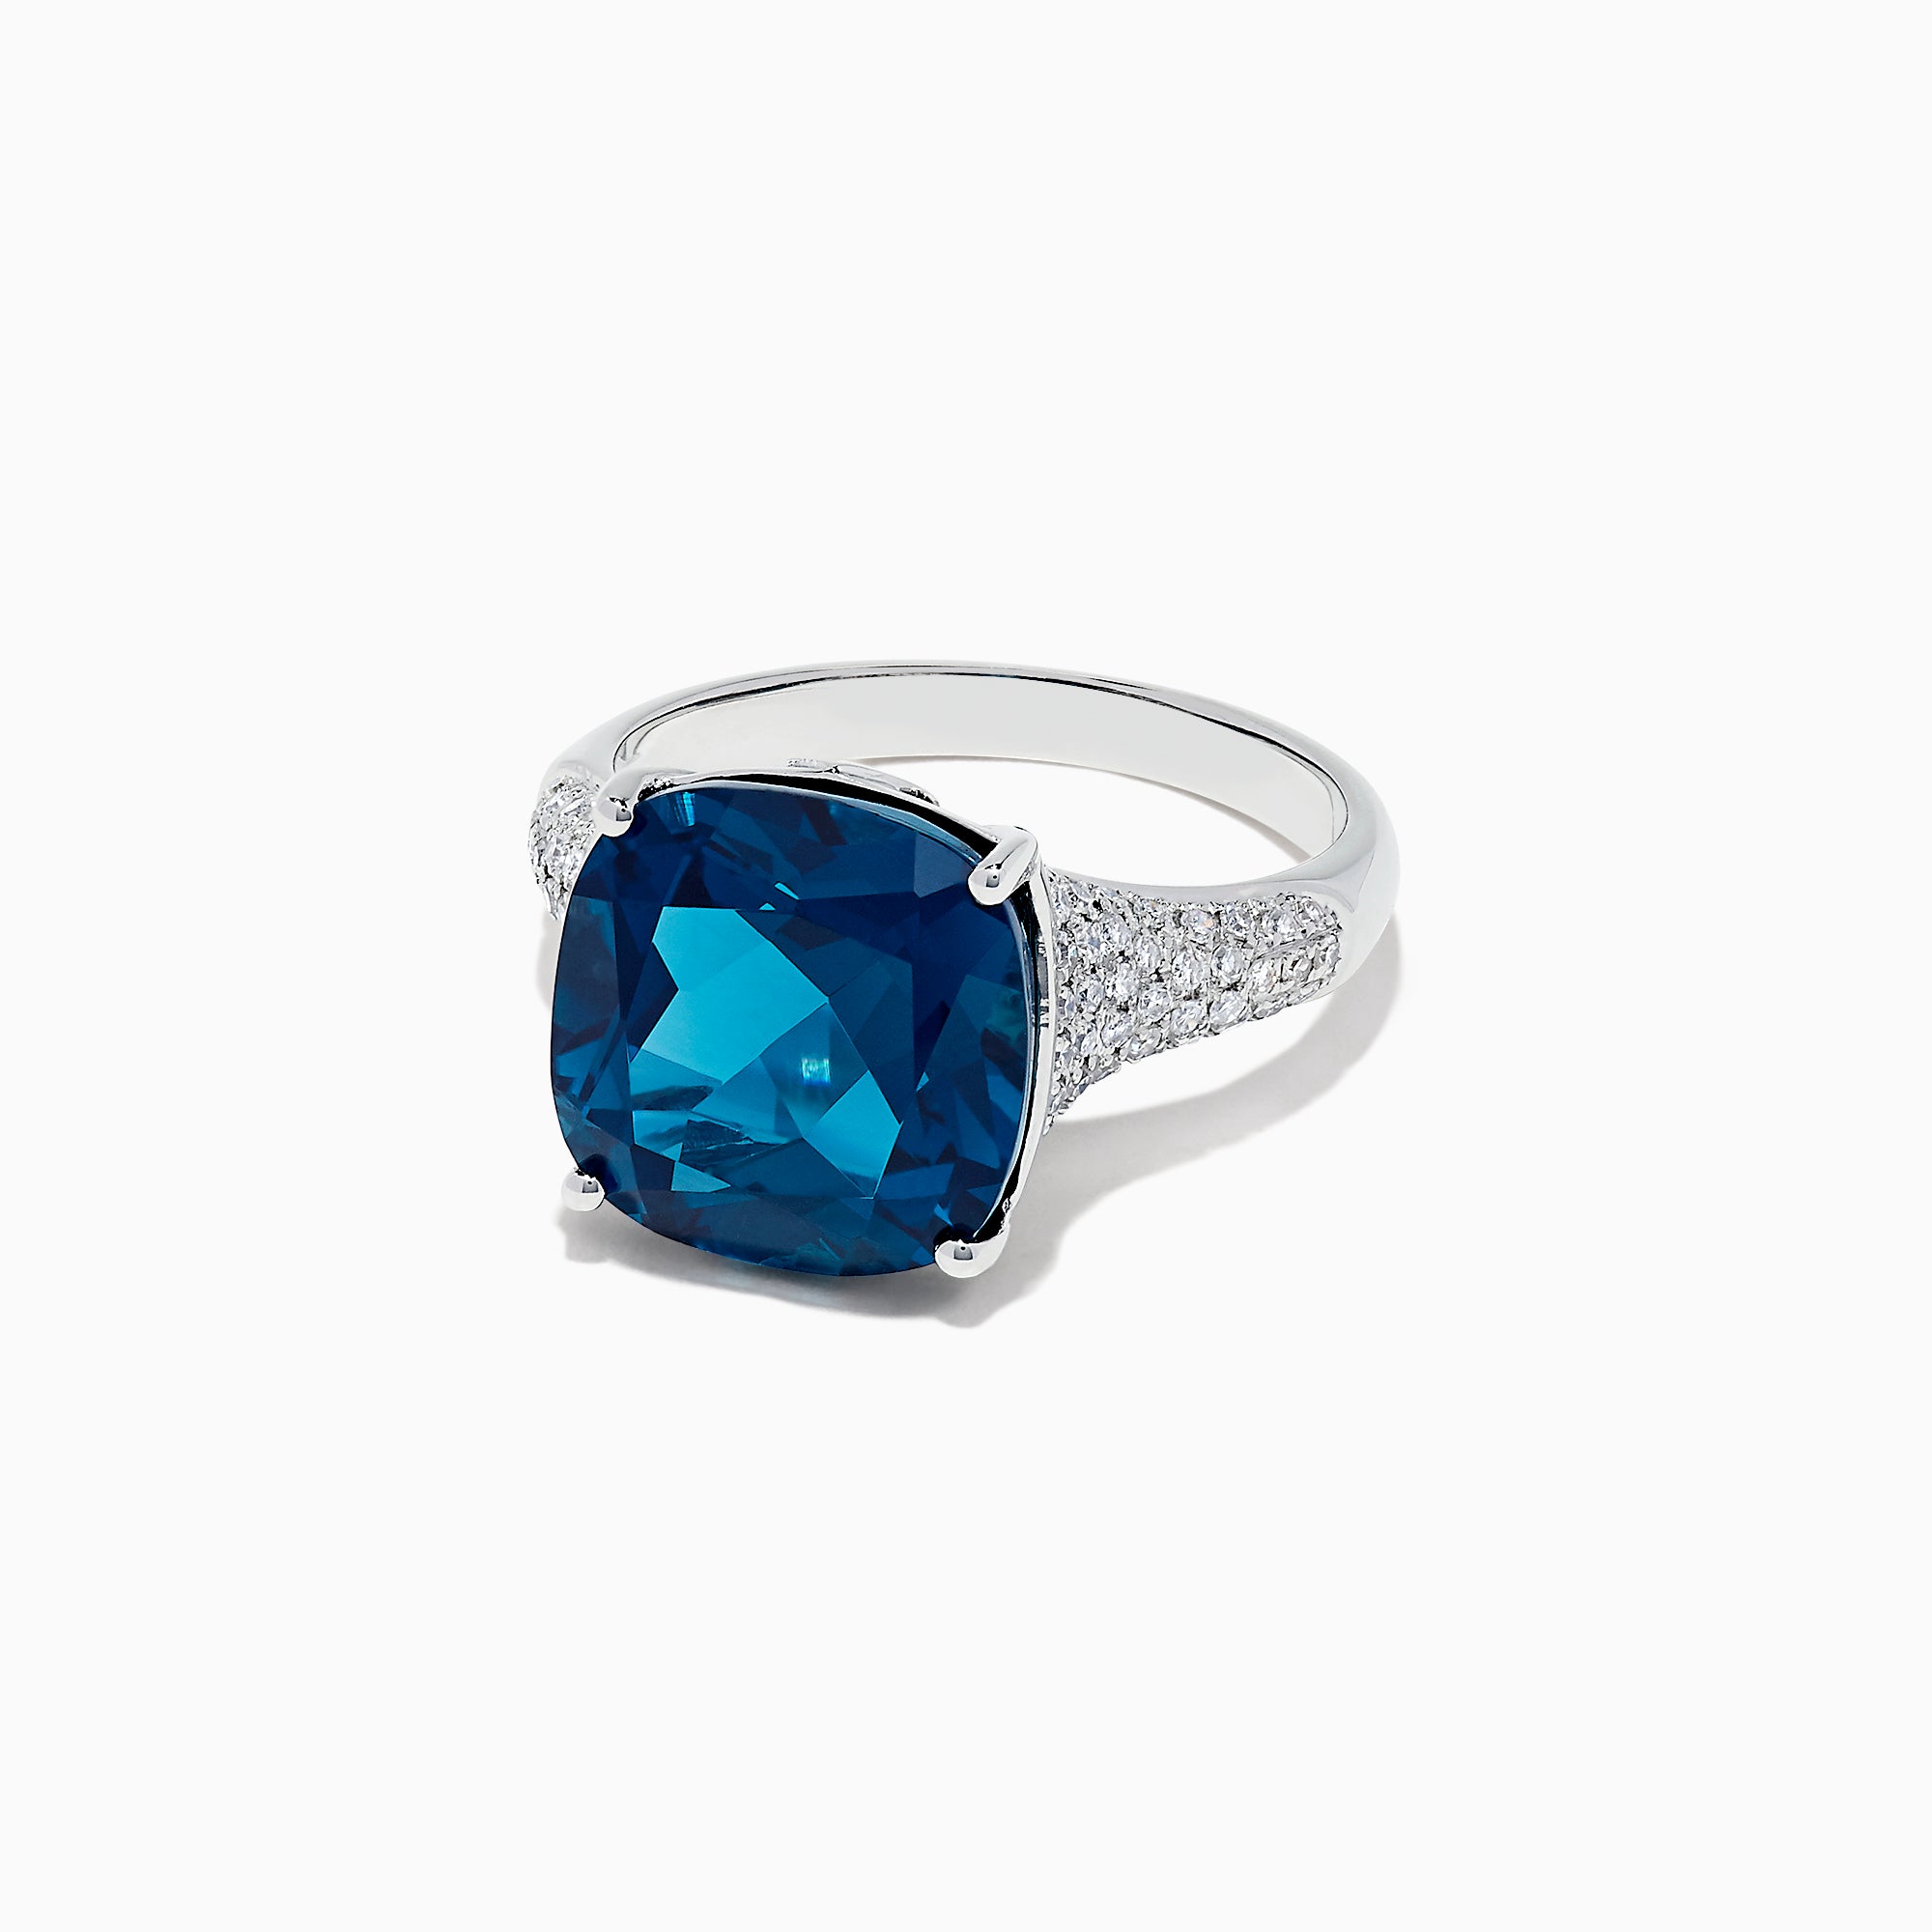 Effy Ocean Bleu 14K Gold London Blue Topaz and Diamond Ring, 8.69 TCW